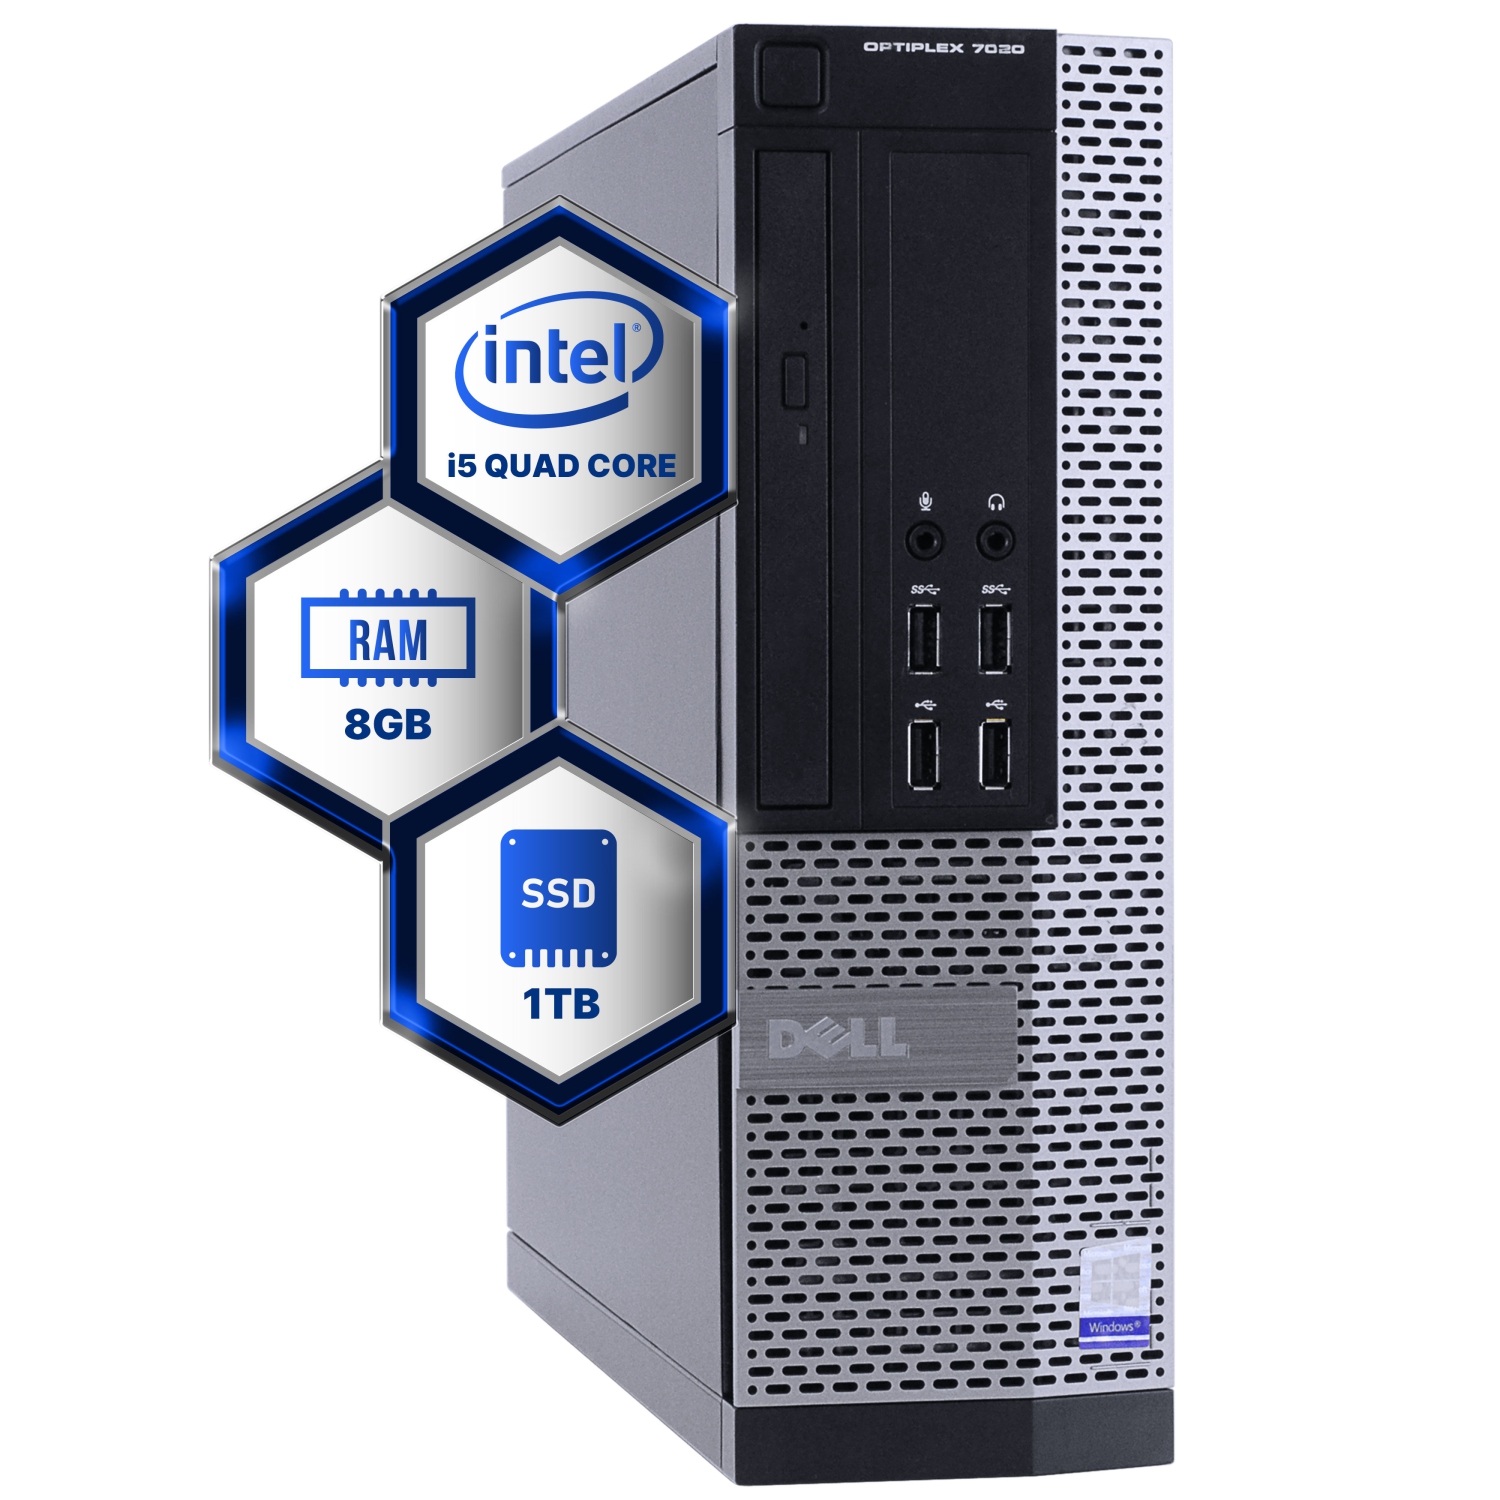 Refurbished (Good) - Dell Optiplex 4th Gen Desktop Computer | Quad Core Intel i5 (3.2) | 8GB DDR3 RAM | 1TB SSD | Windows 10 Professional | Home or Office PC